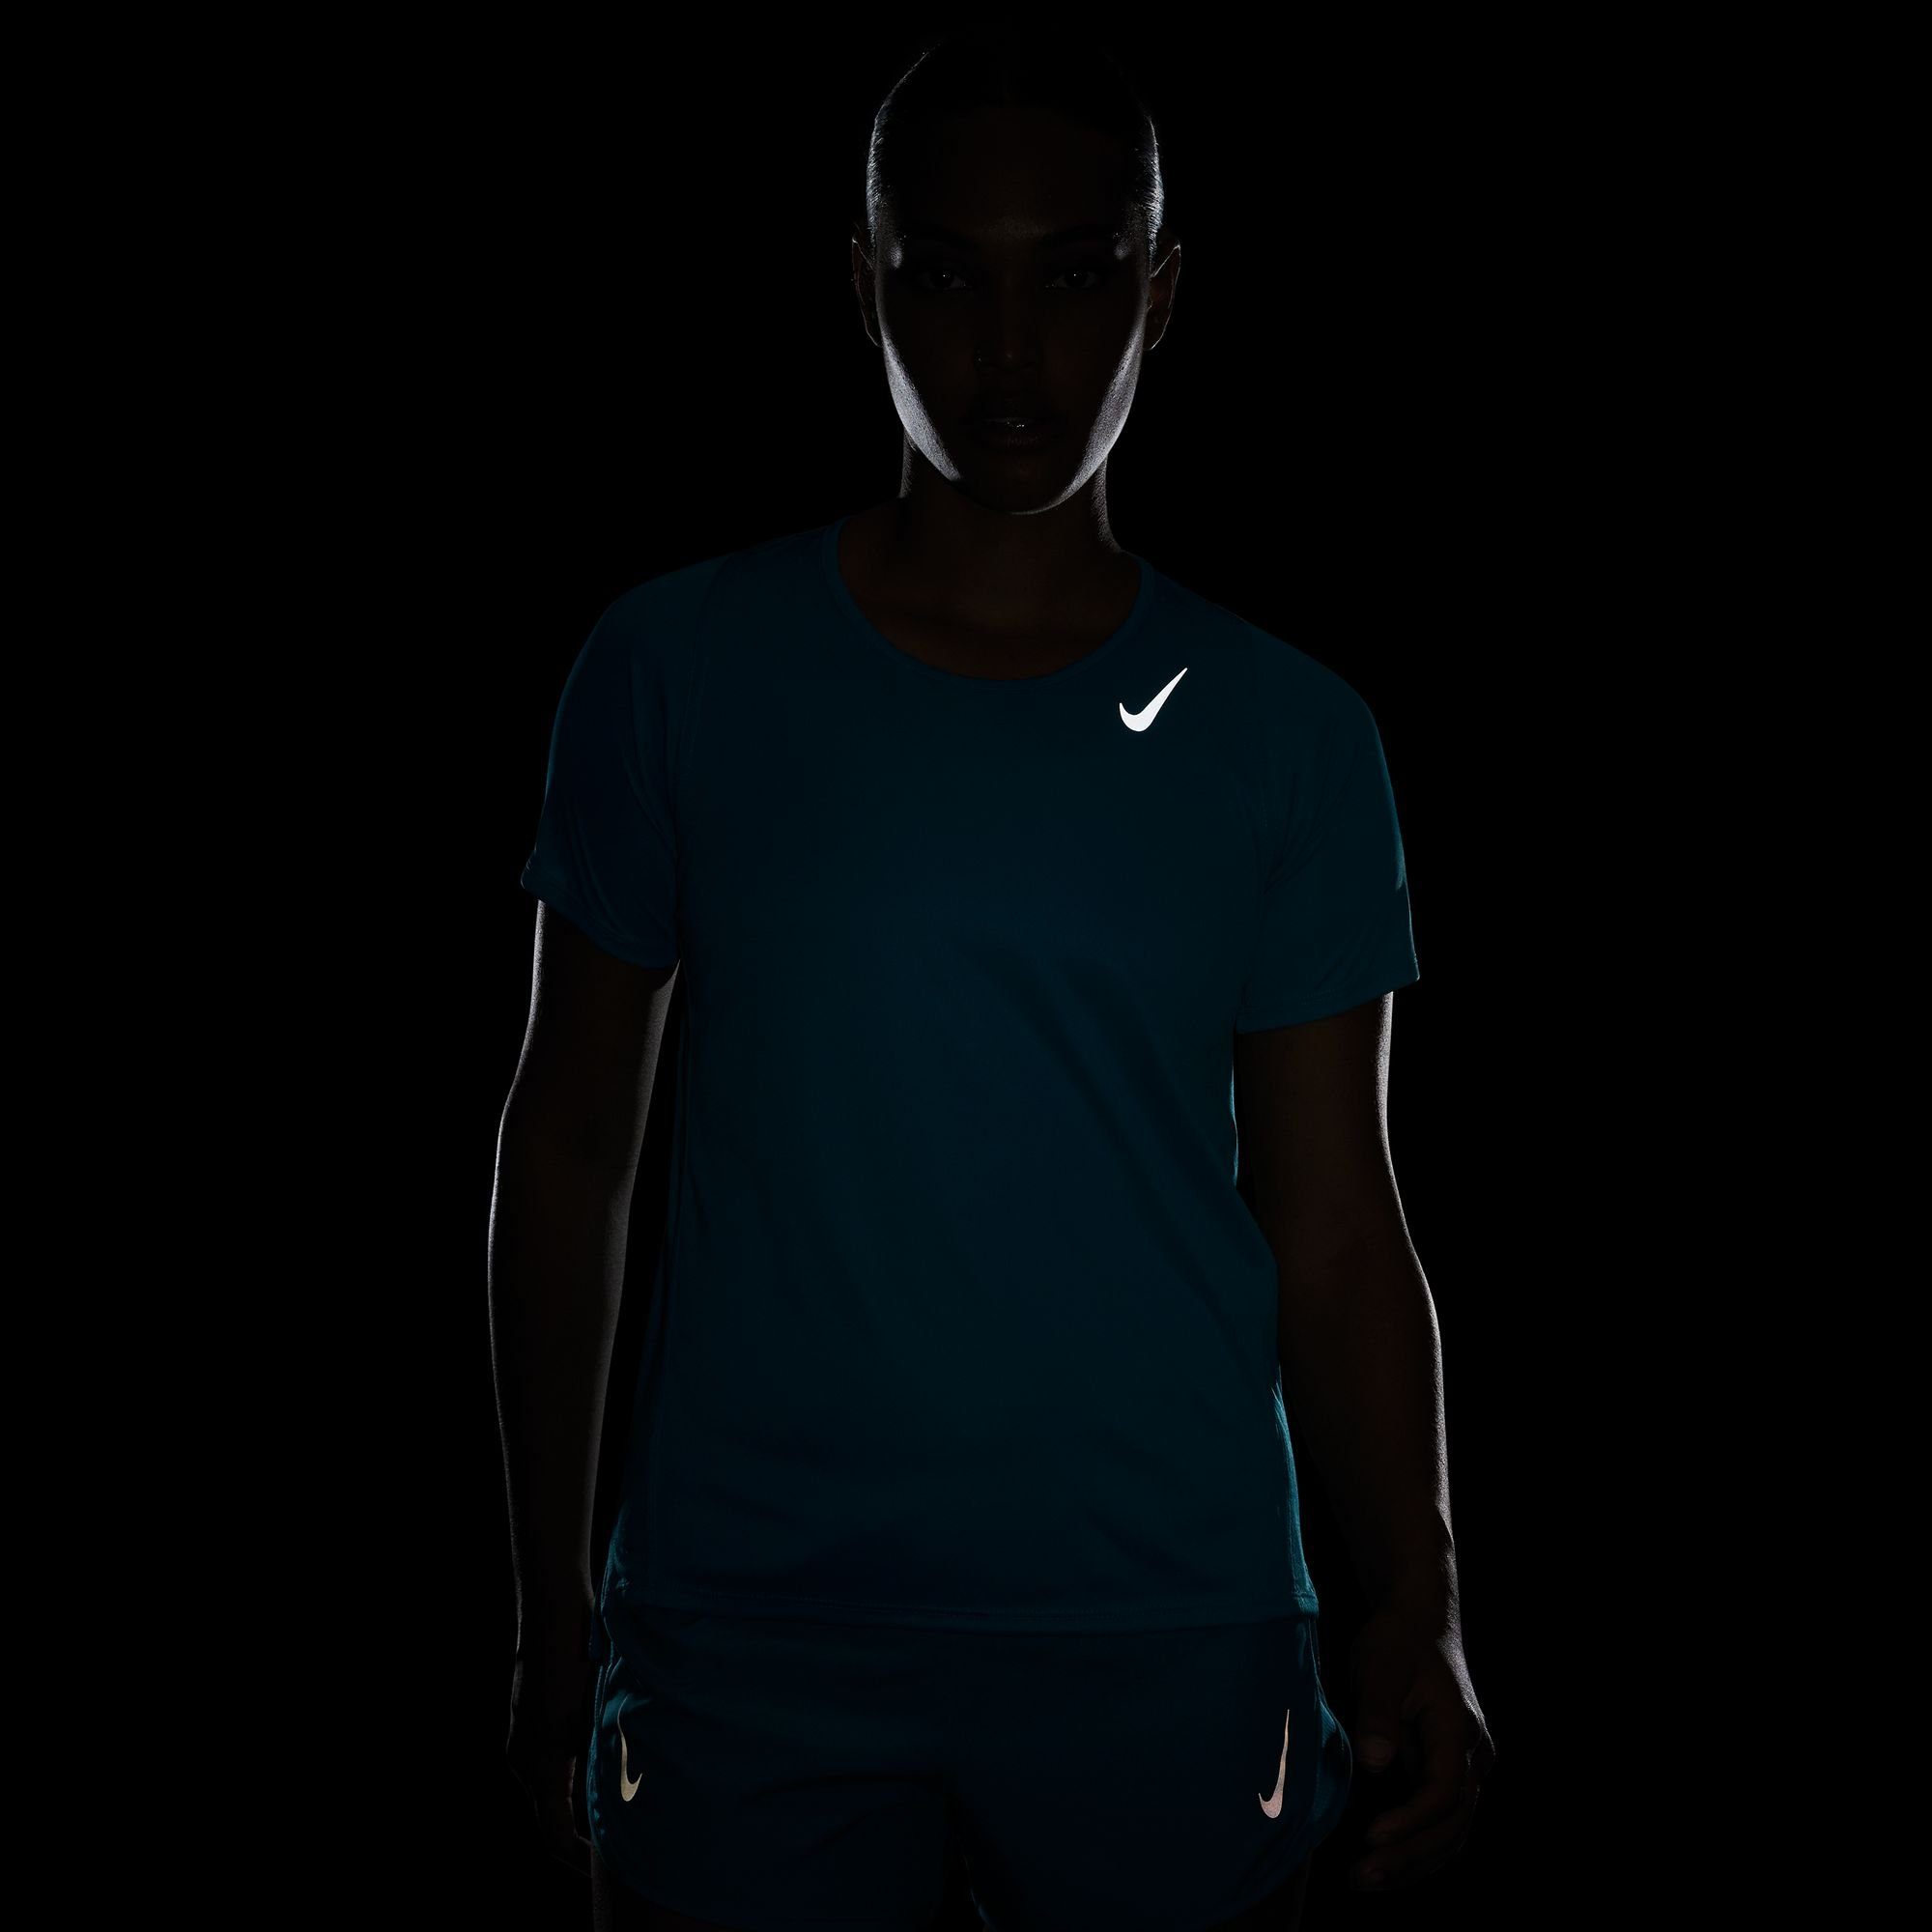 SHORT-SLEEVE Nike RUNNING Laufshirt DRI-FIT TOP WOMEN'S TEAL/REFLECTIVE RAPID SILV RACE